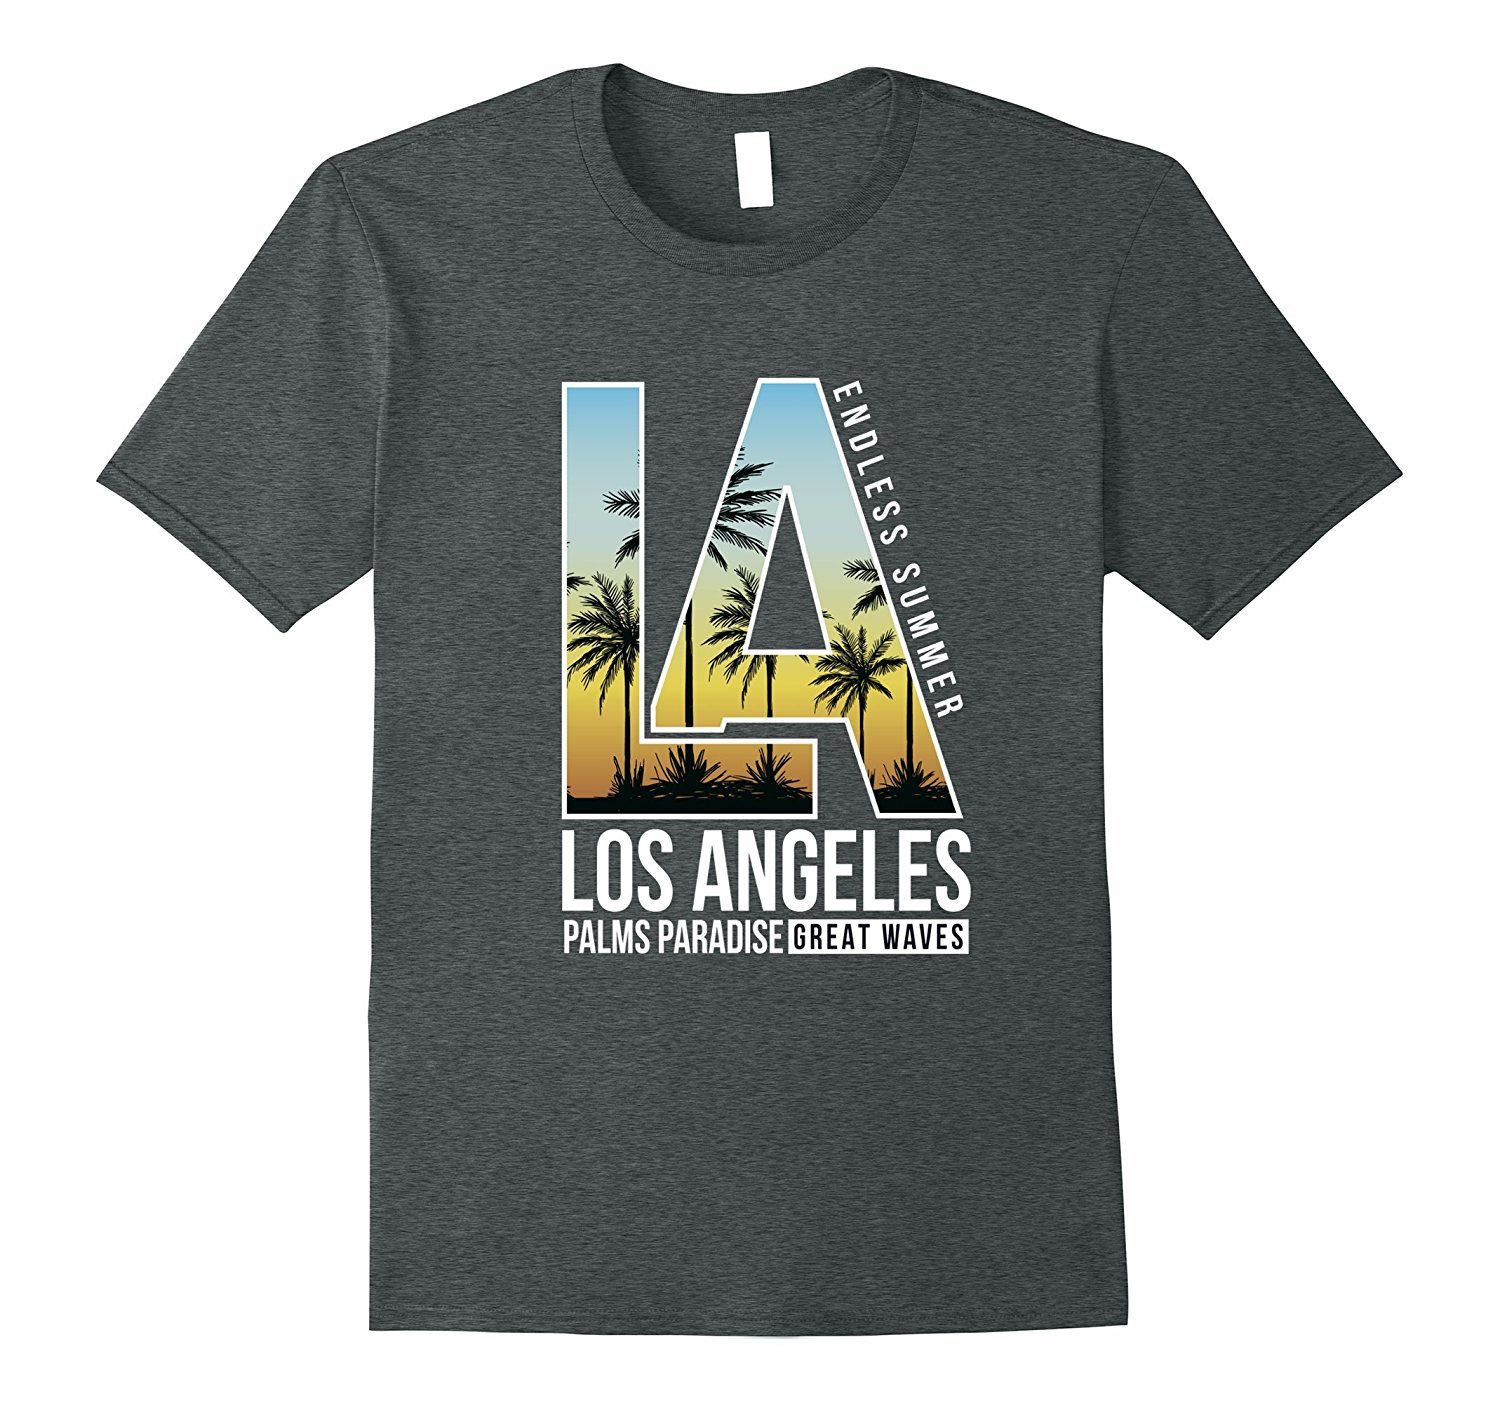 Los Angeles T-shirt Men - T-Shirts, Tank Tops